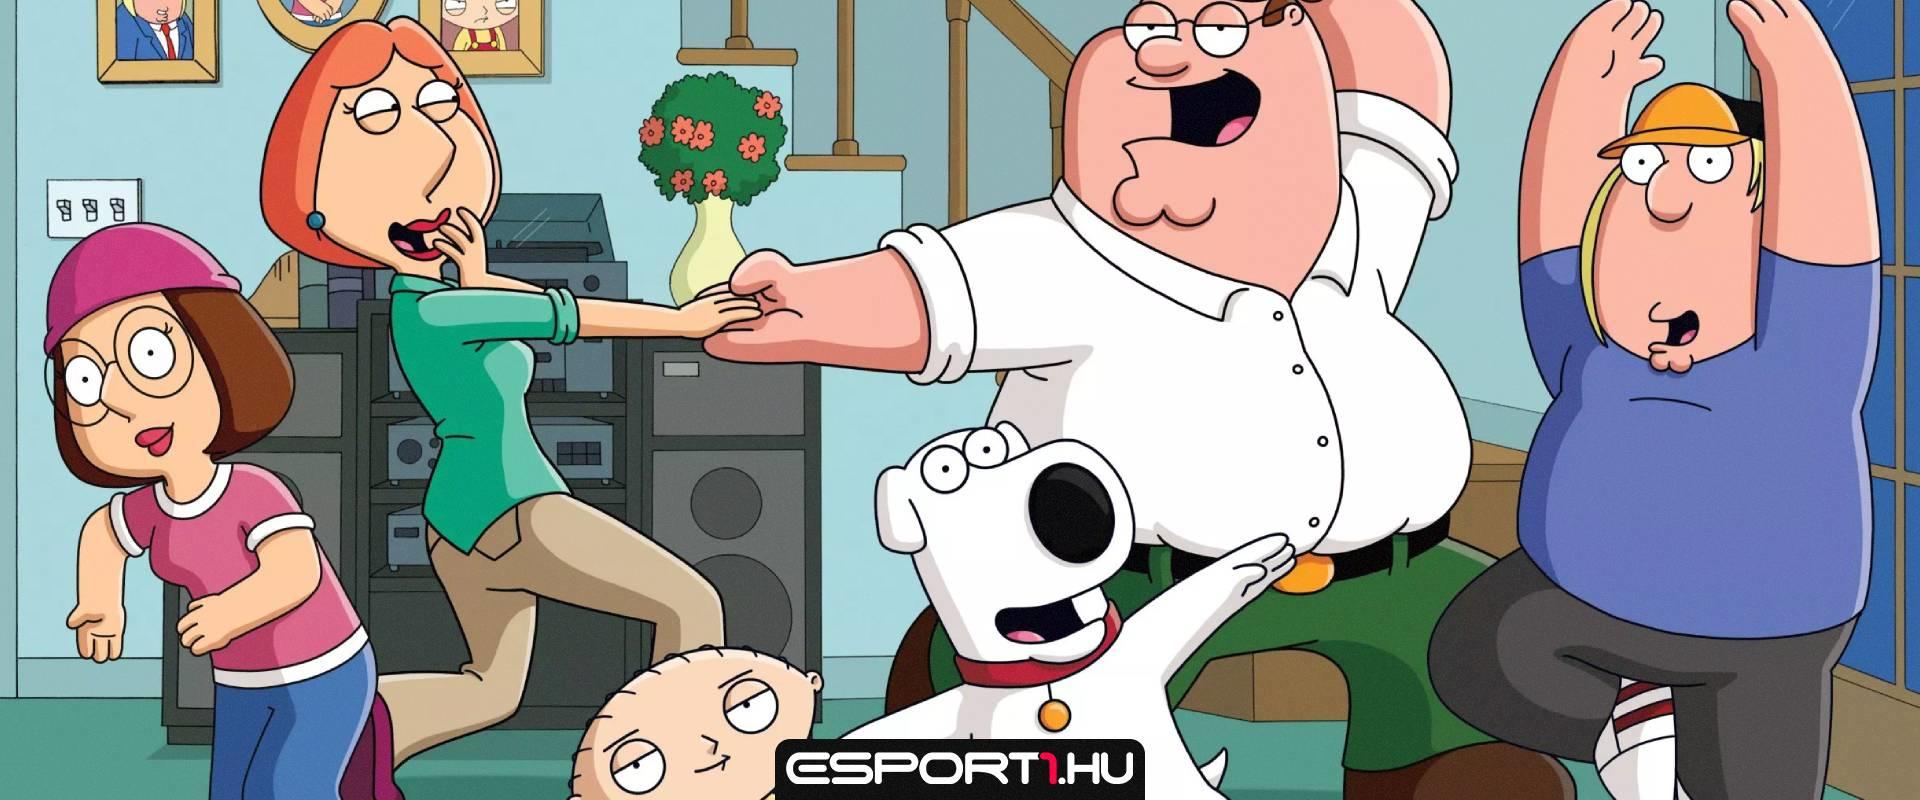 Family Guy-szereplő lett Pokimane is